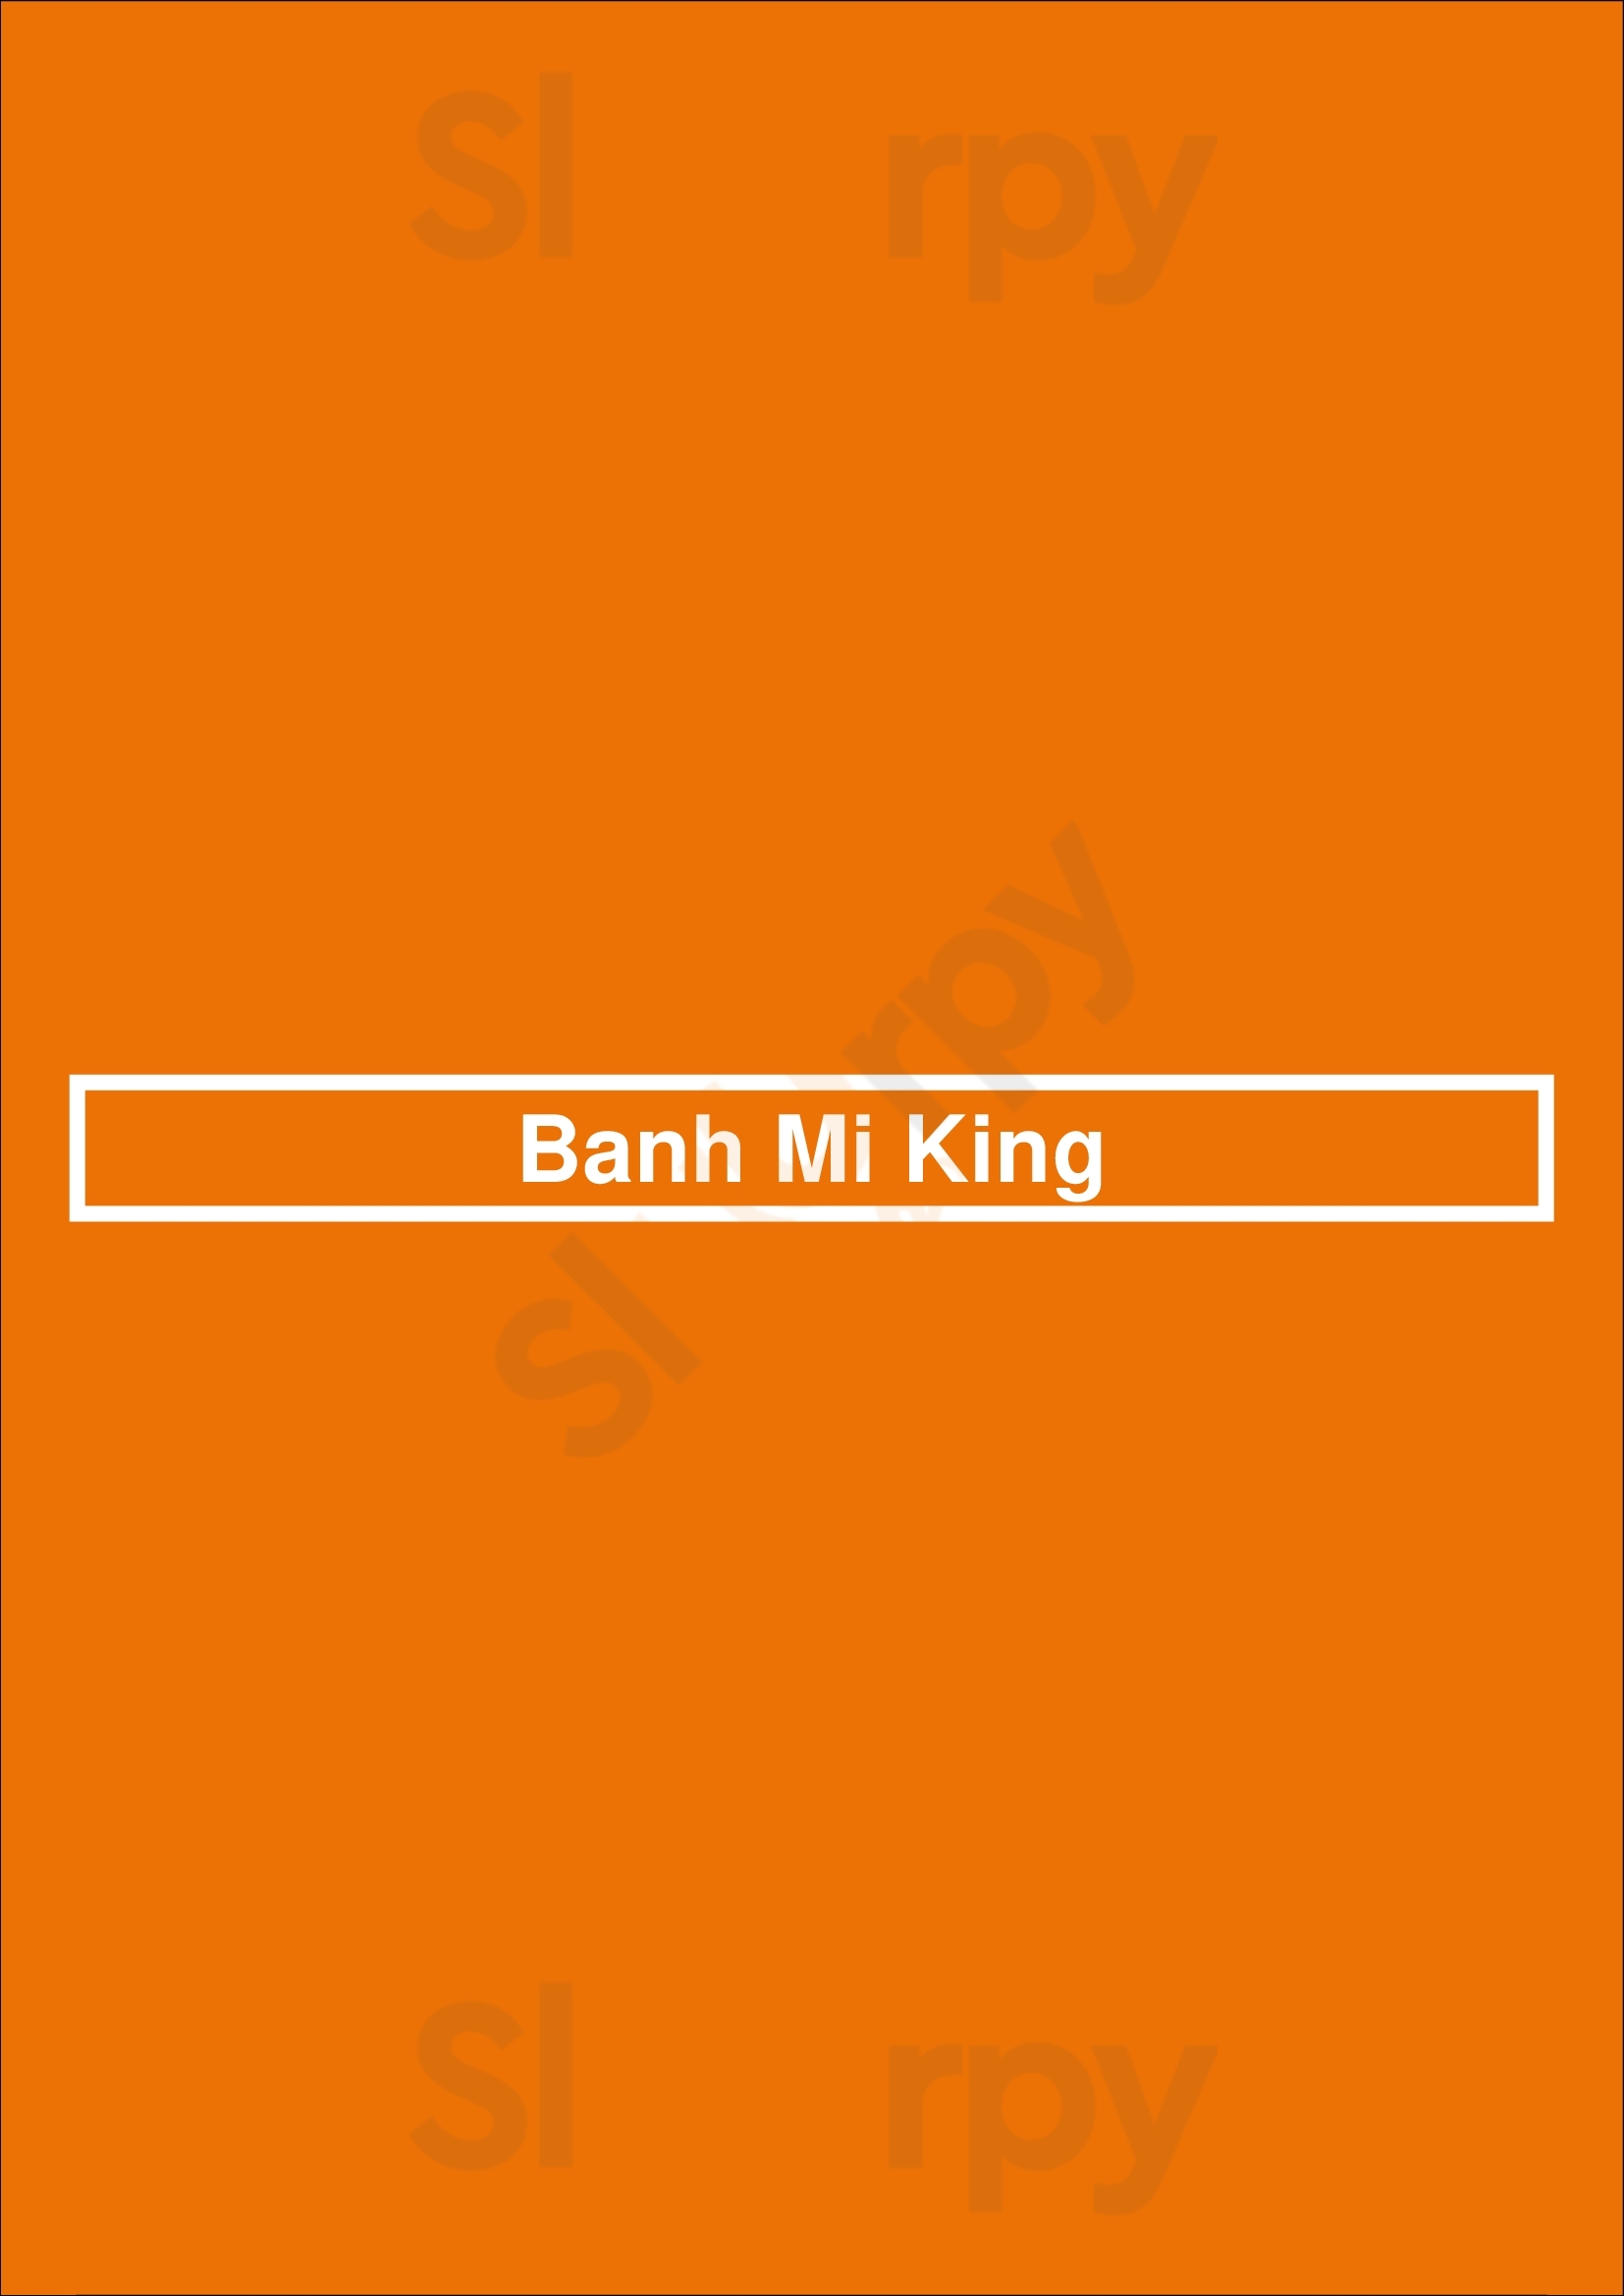 Banh Mi King Winnipeg Menu - 1